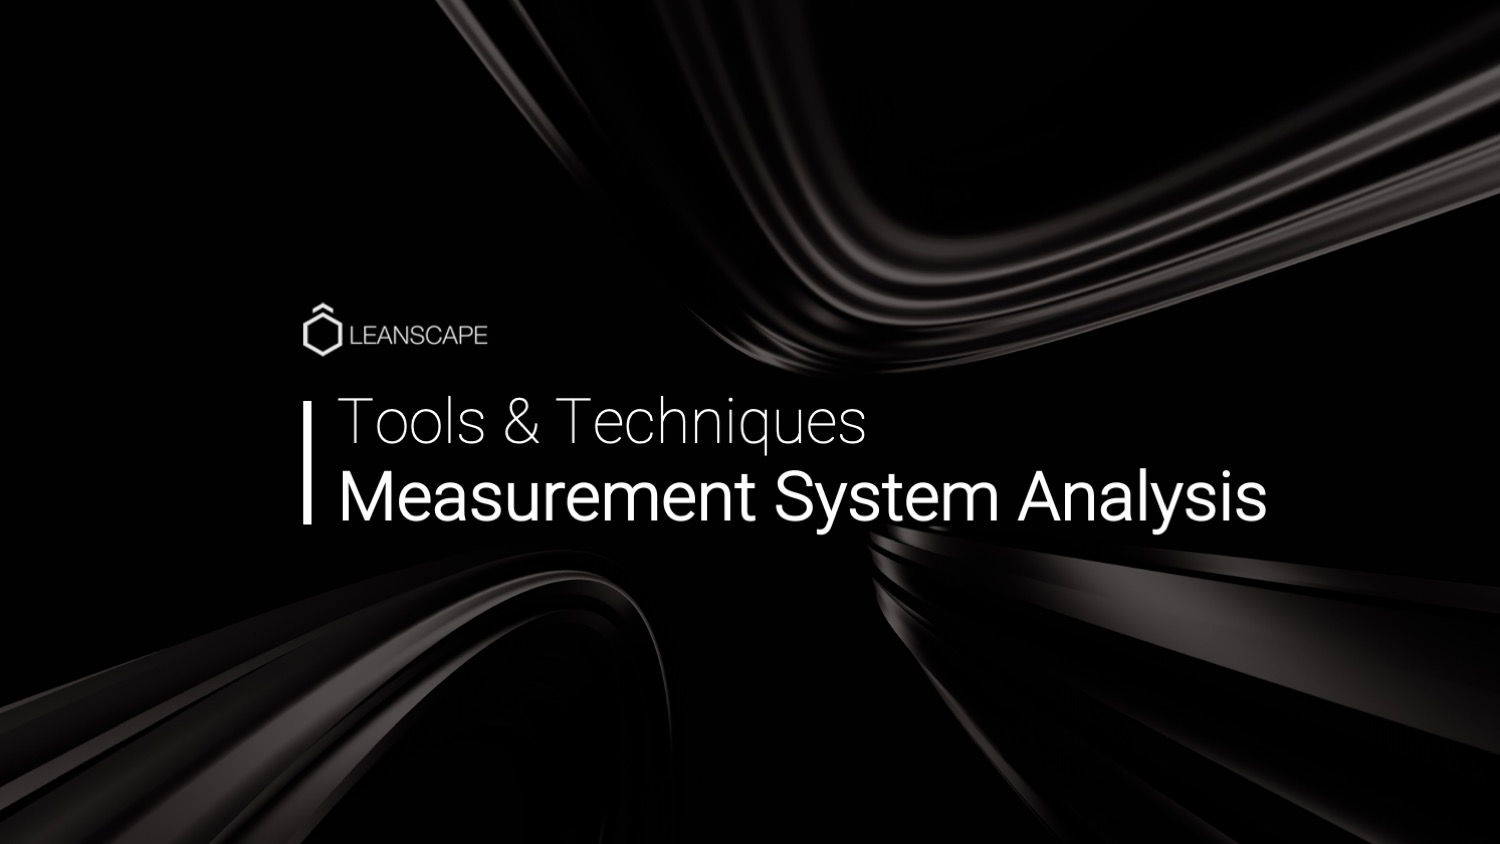 Measure System Analysis